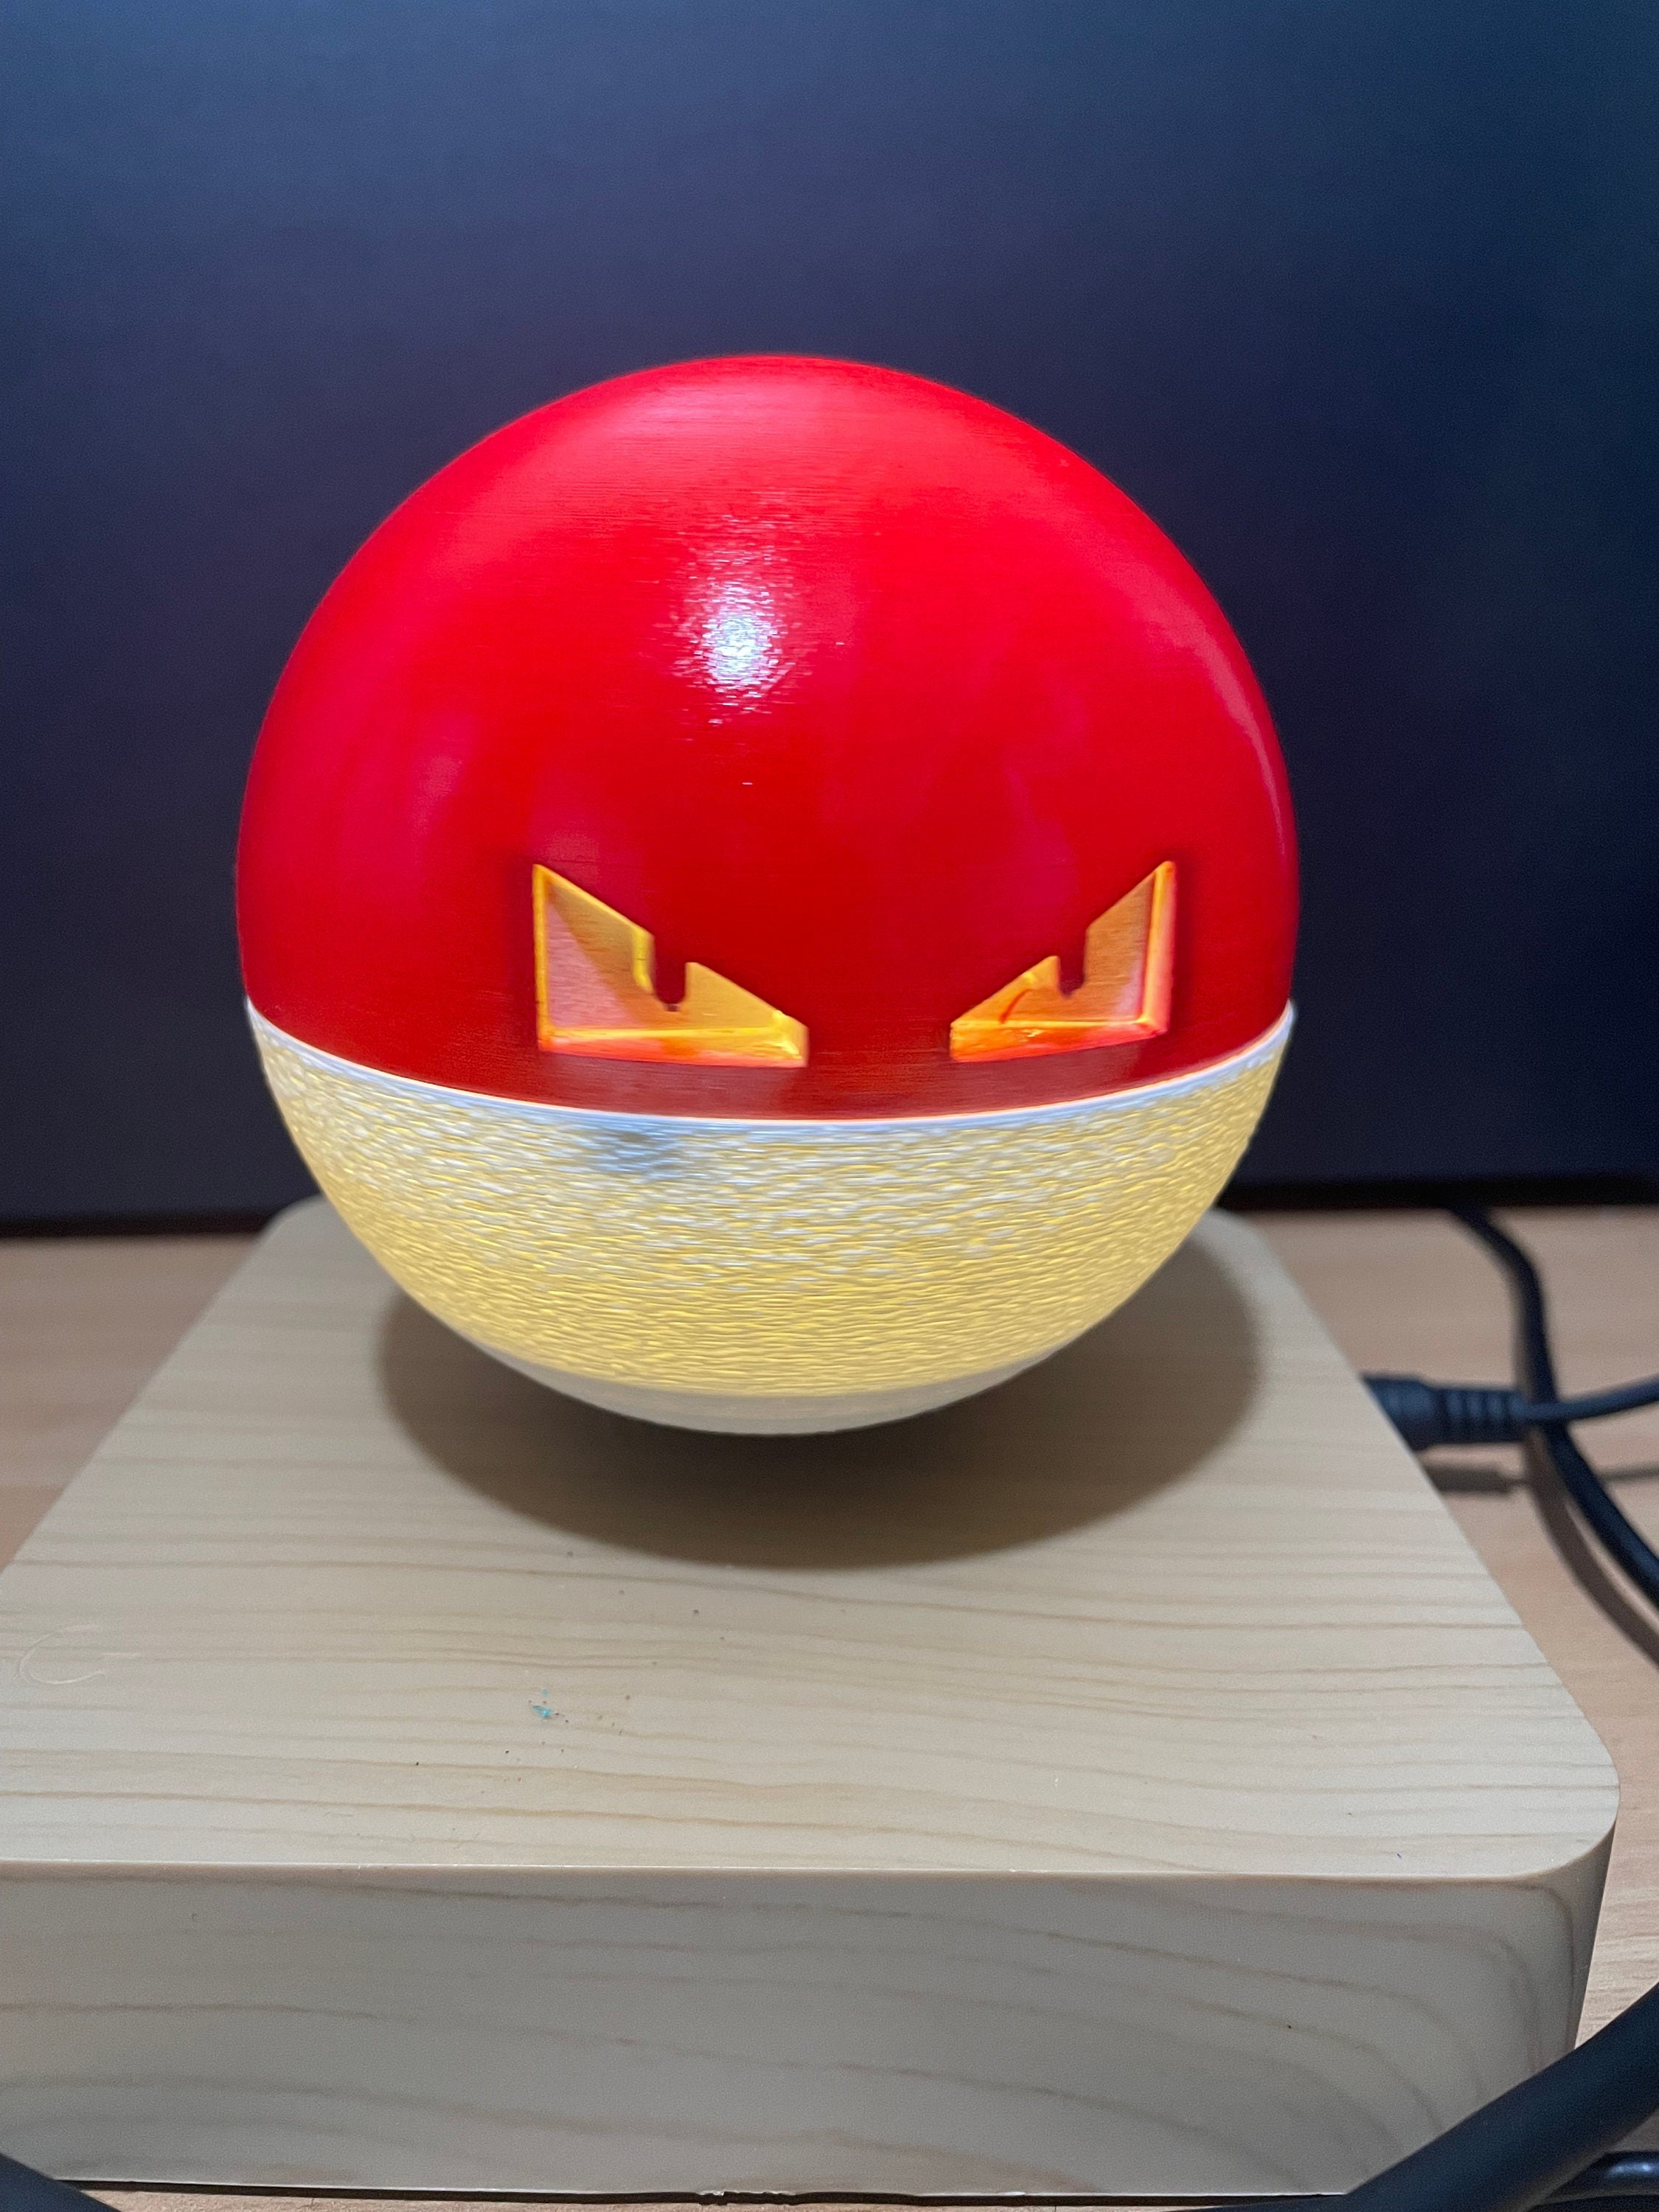 Voltorb and Voltorb Hisuian pokemon high-res 3D model 3D printable